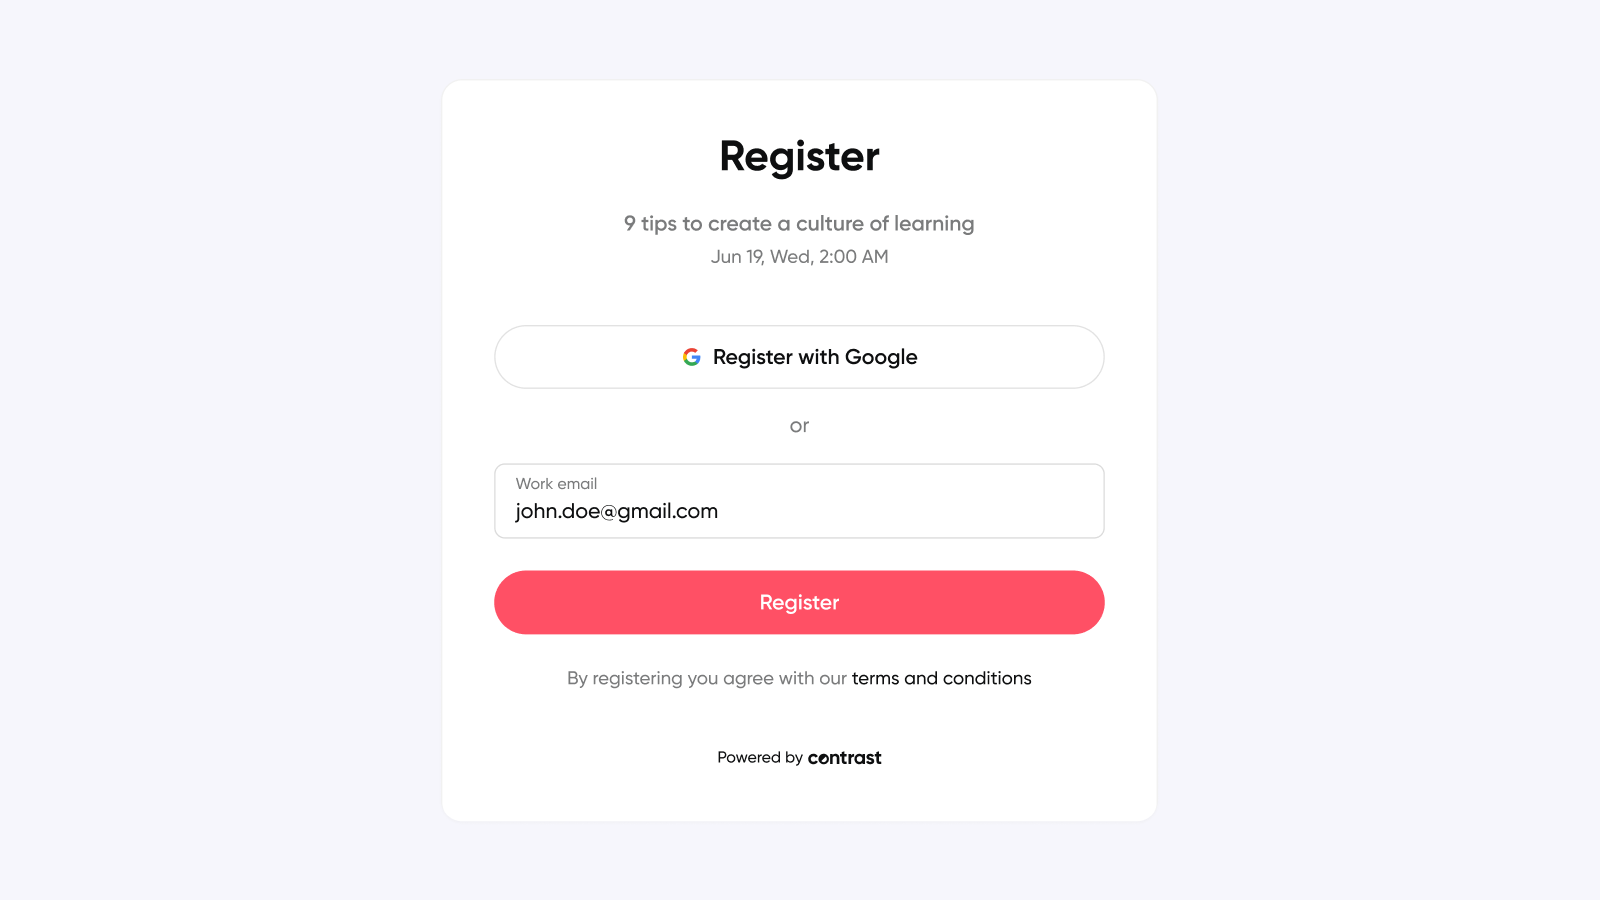 Embed the registration form